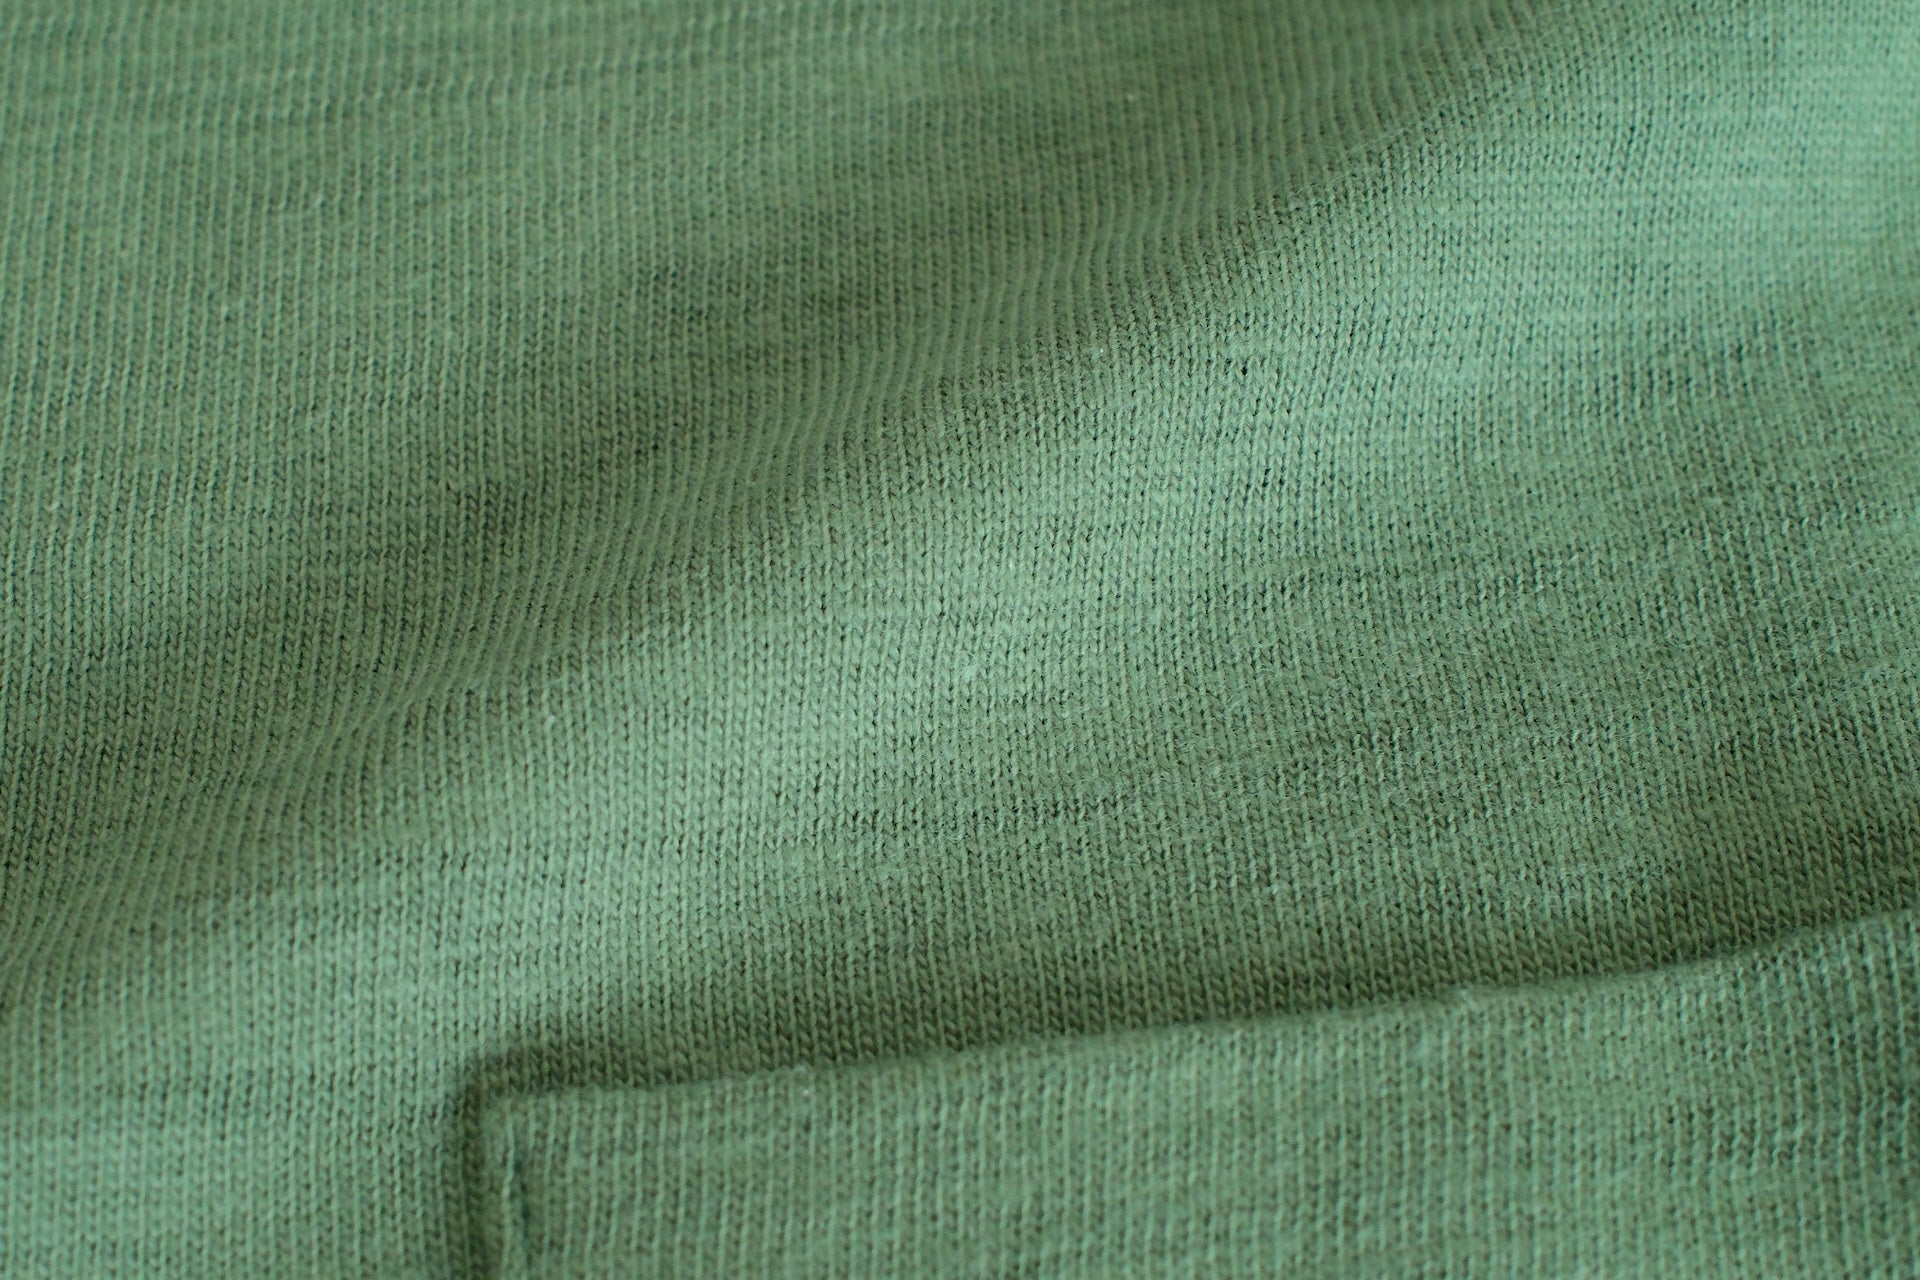 Warehouse 5.5oz "Bamboo Textured" Pocket Tee (MC Green)